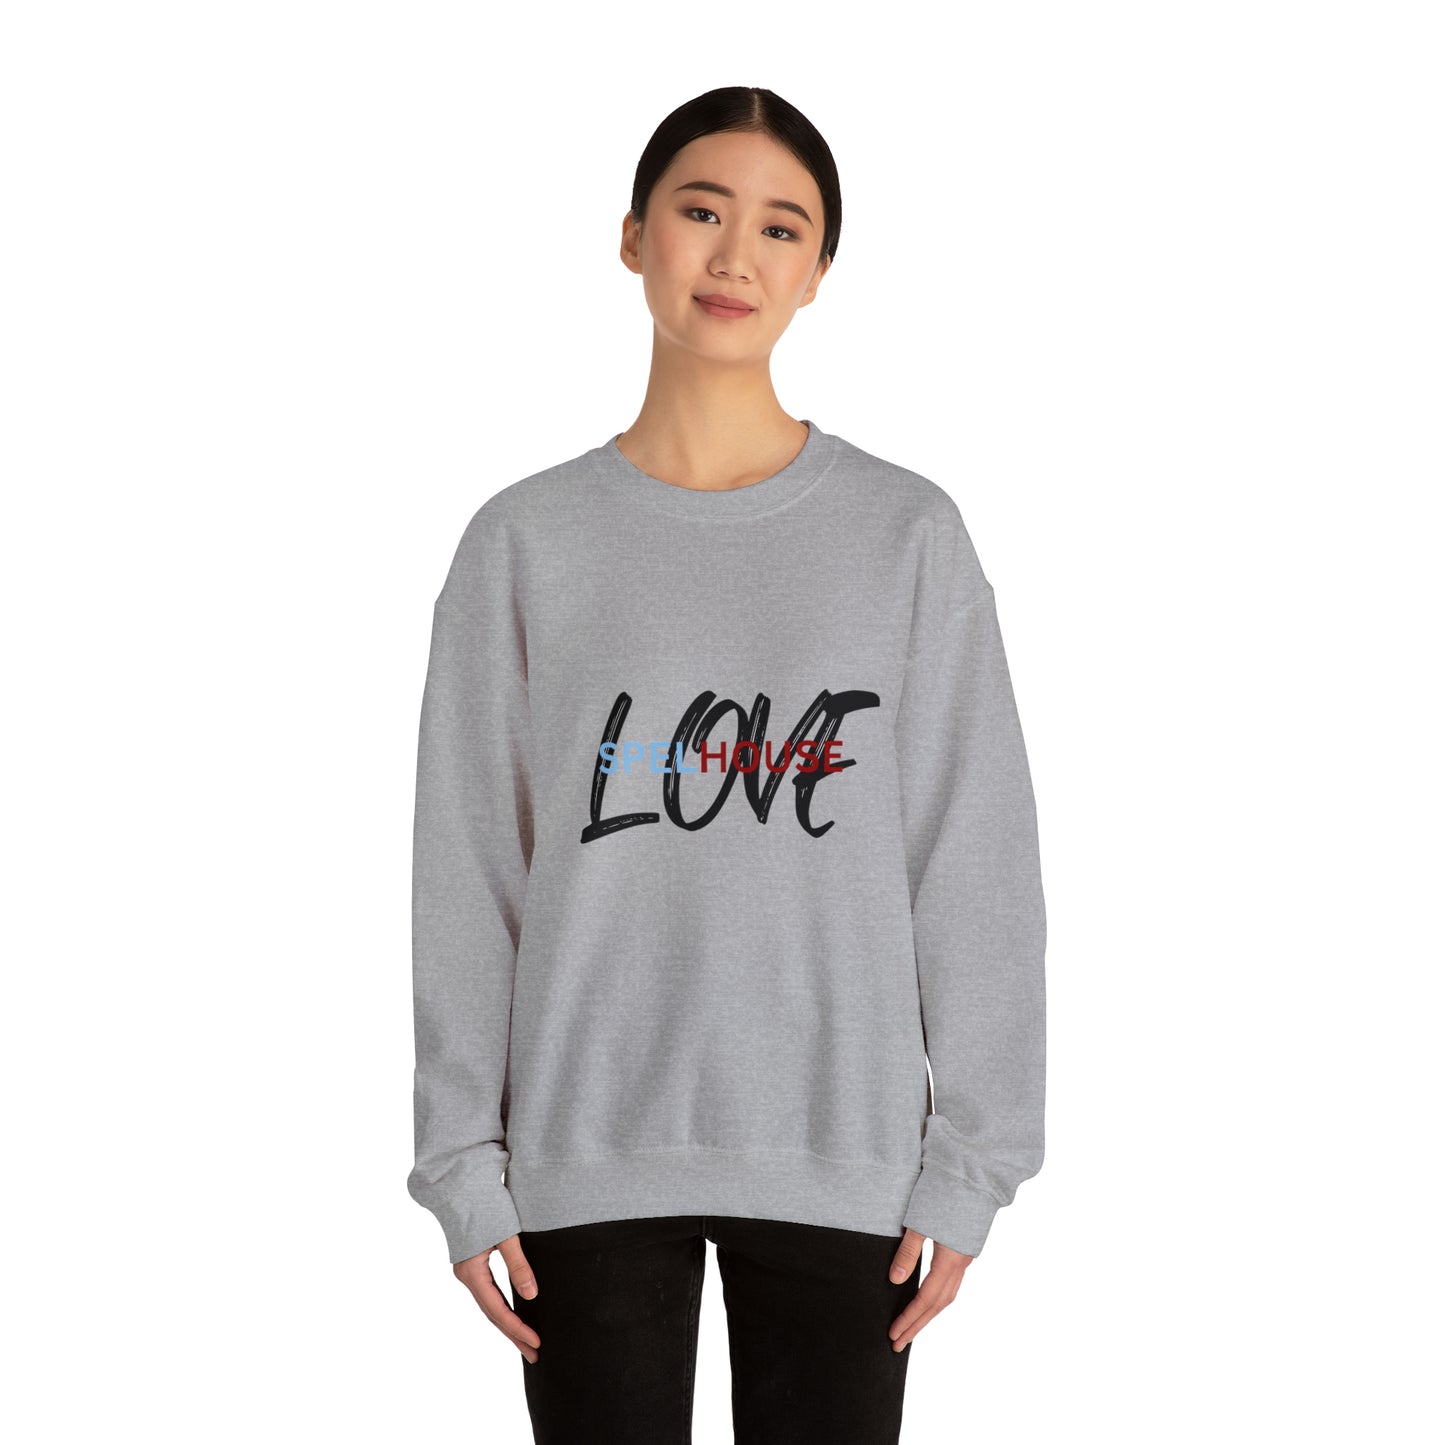 SPELHOUSE LOVE Crewneck Sweatshirt